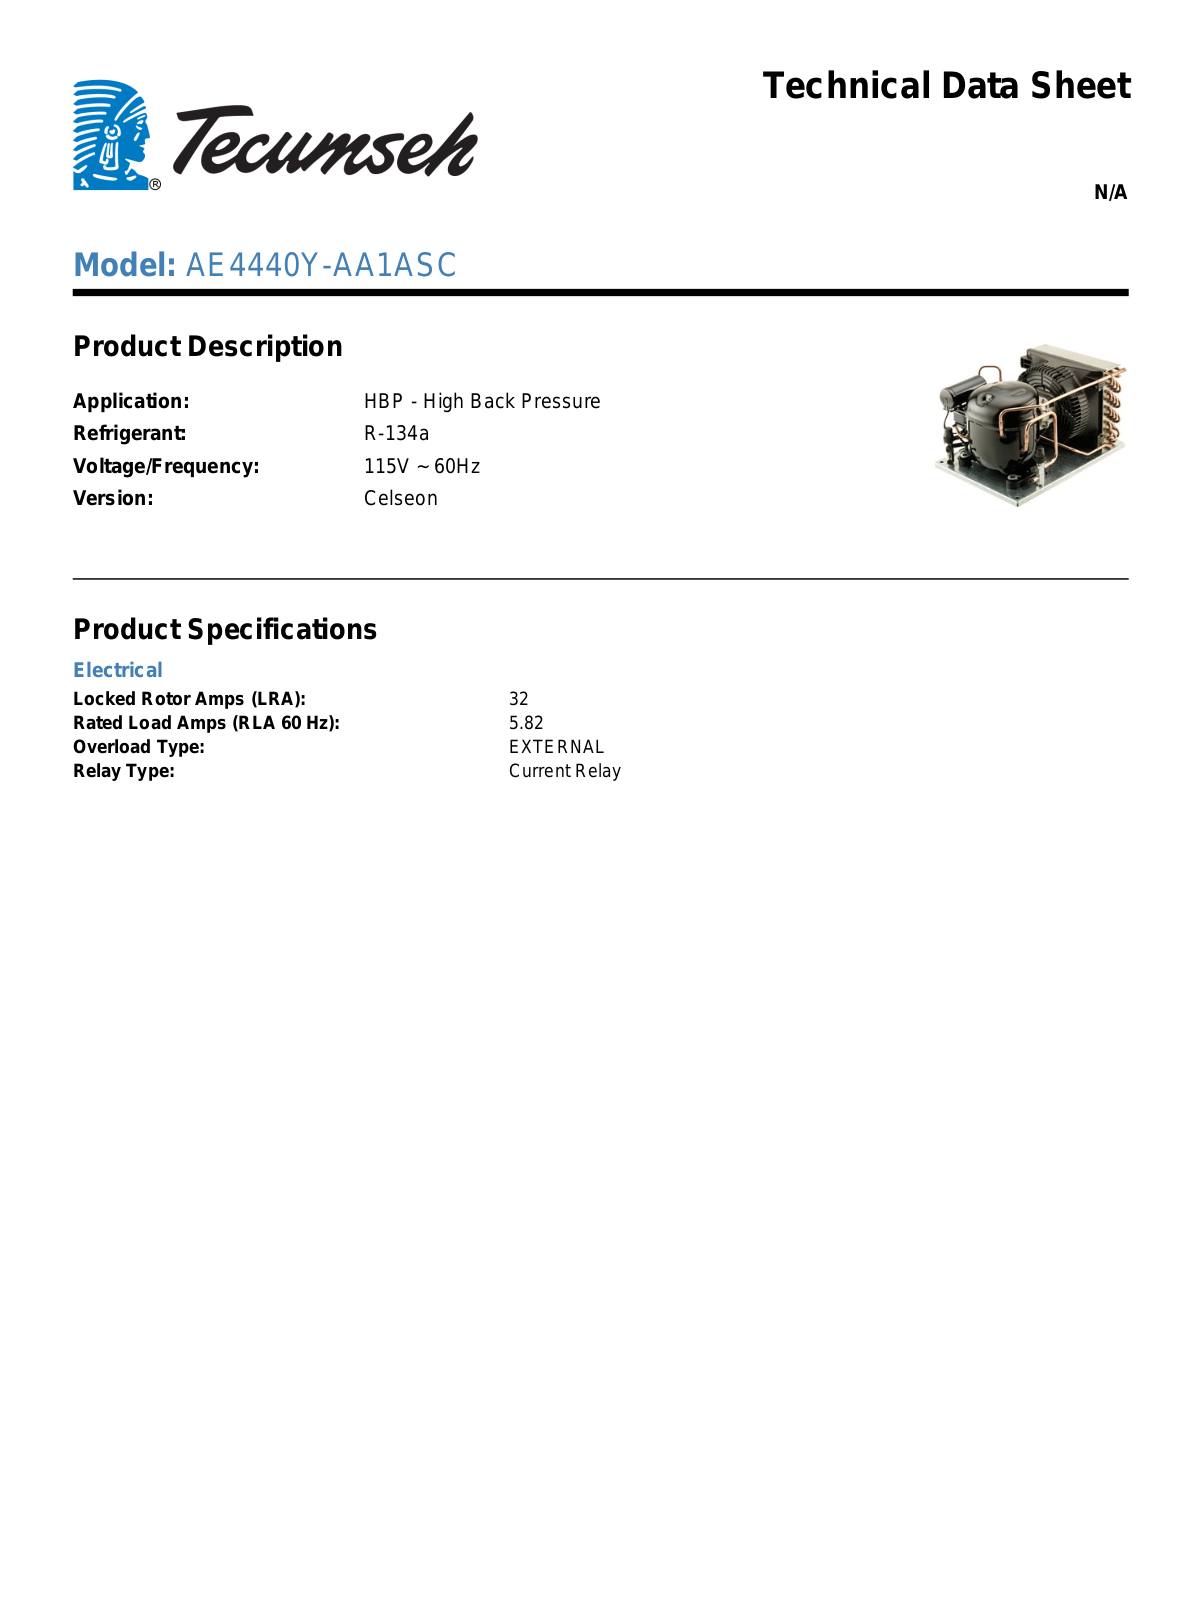 Tecumseh AE4440Y-AA1ASC Technical Data Sheet